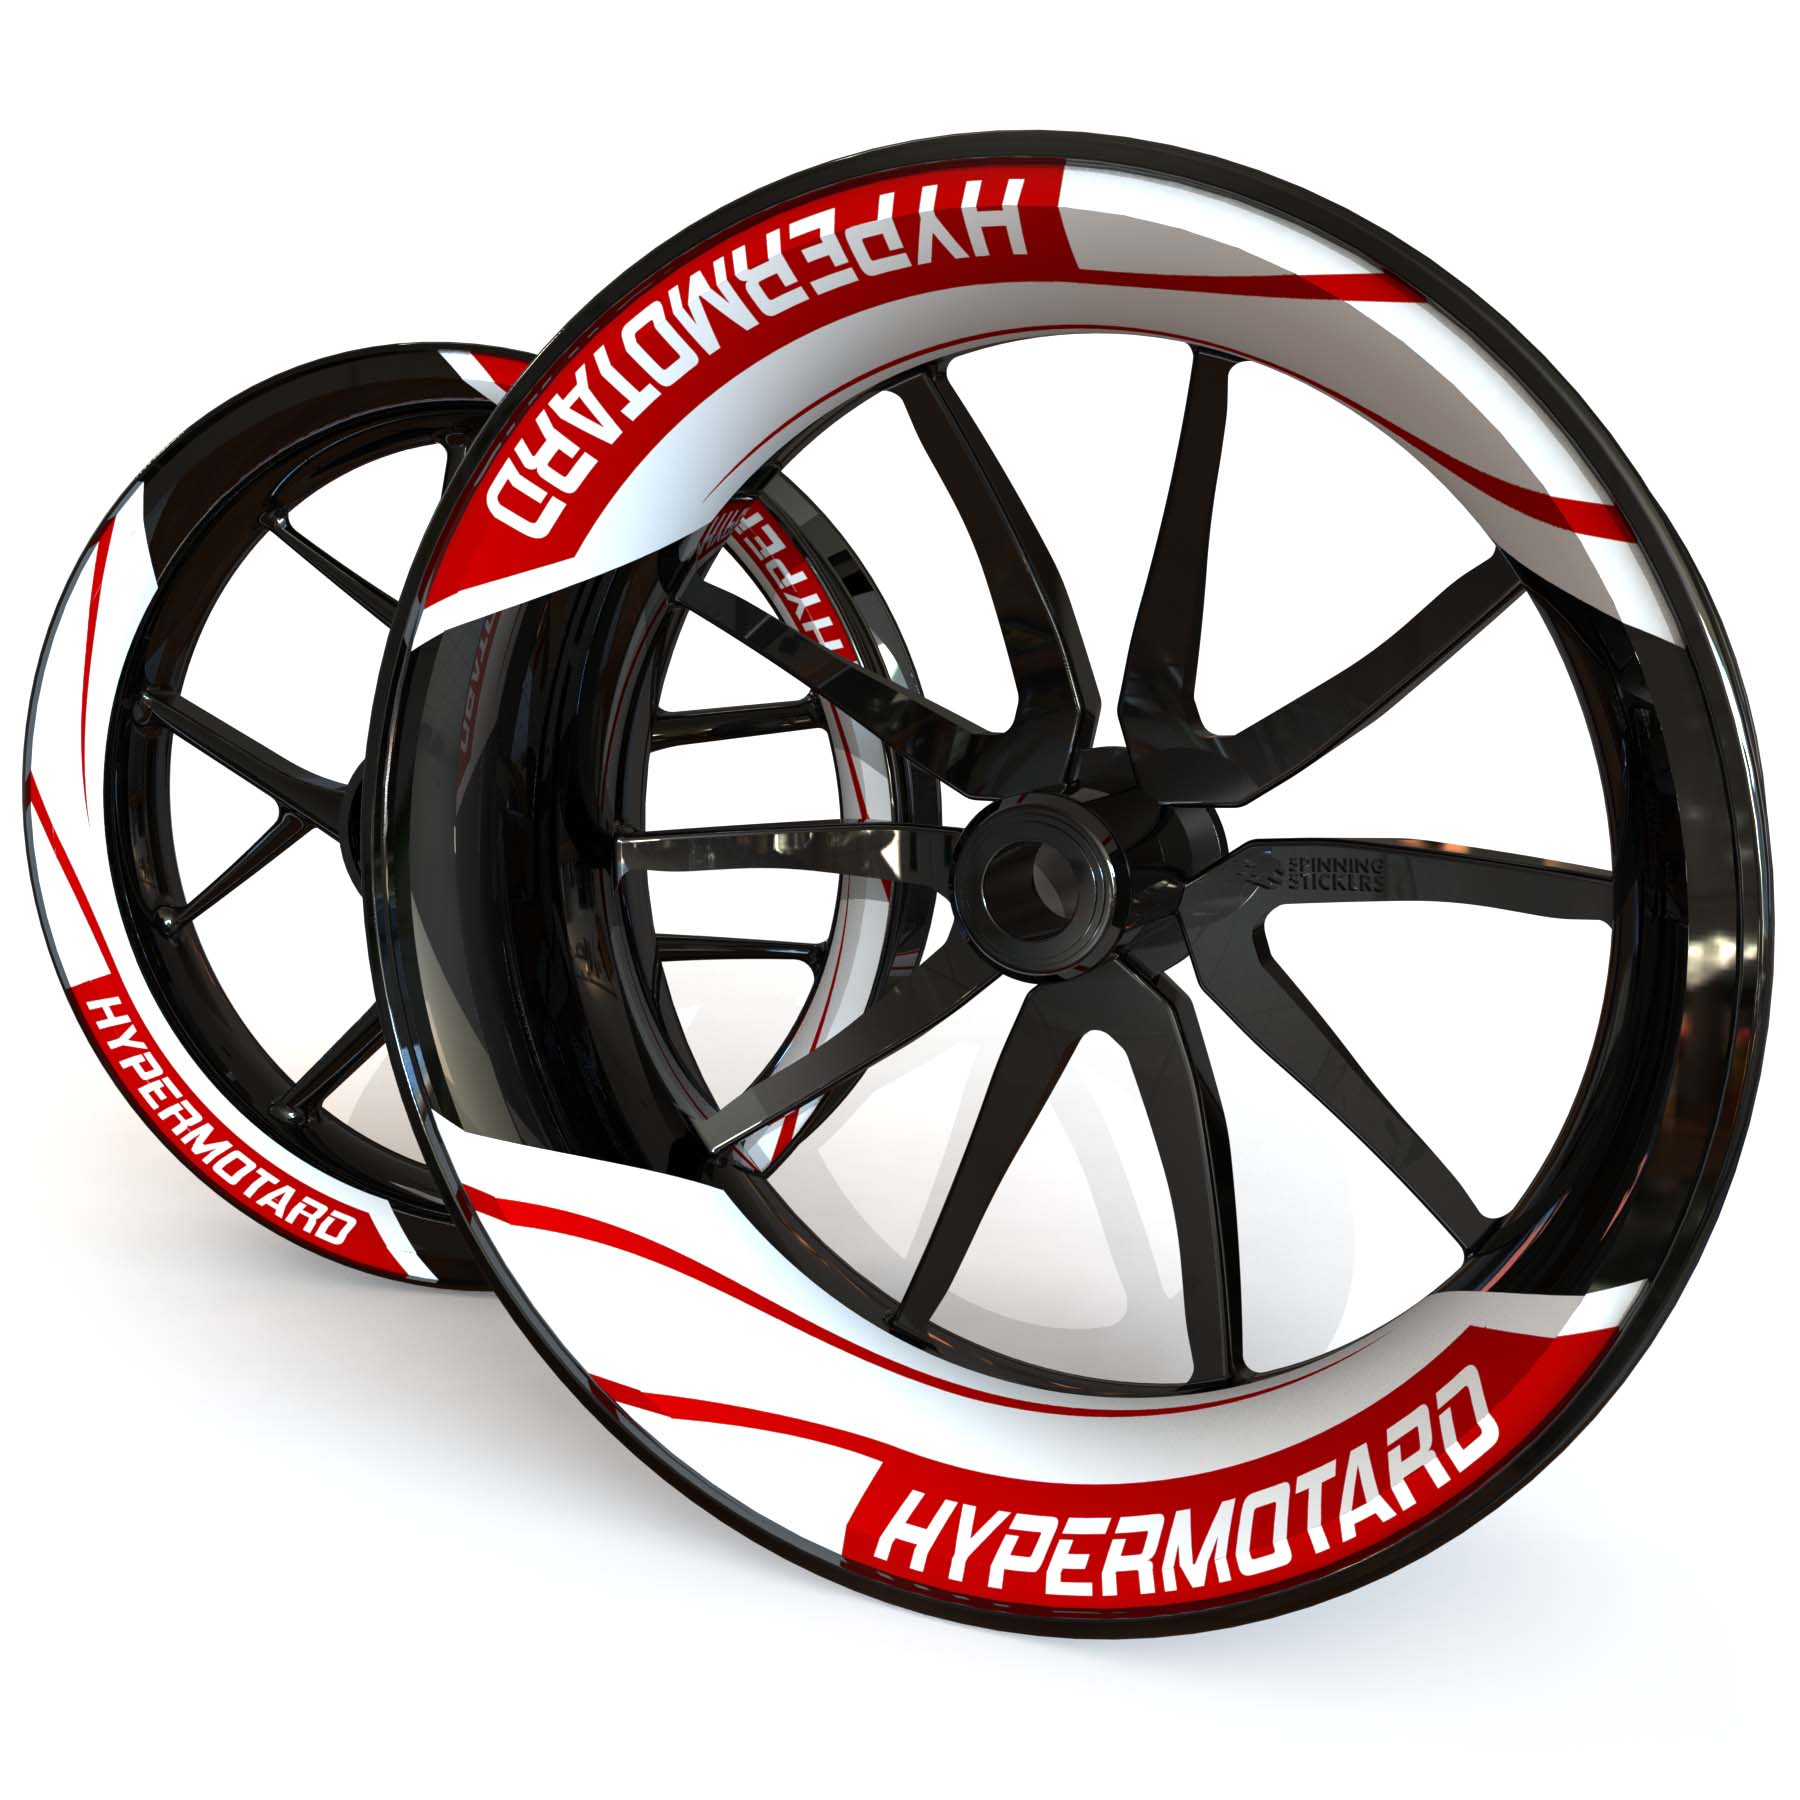 Ducati Hypermotard Wheel Stickers kit - Two Piece Design